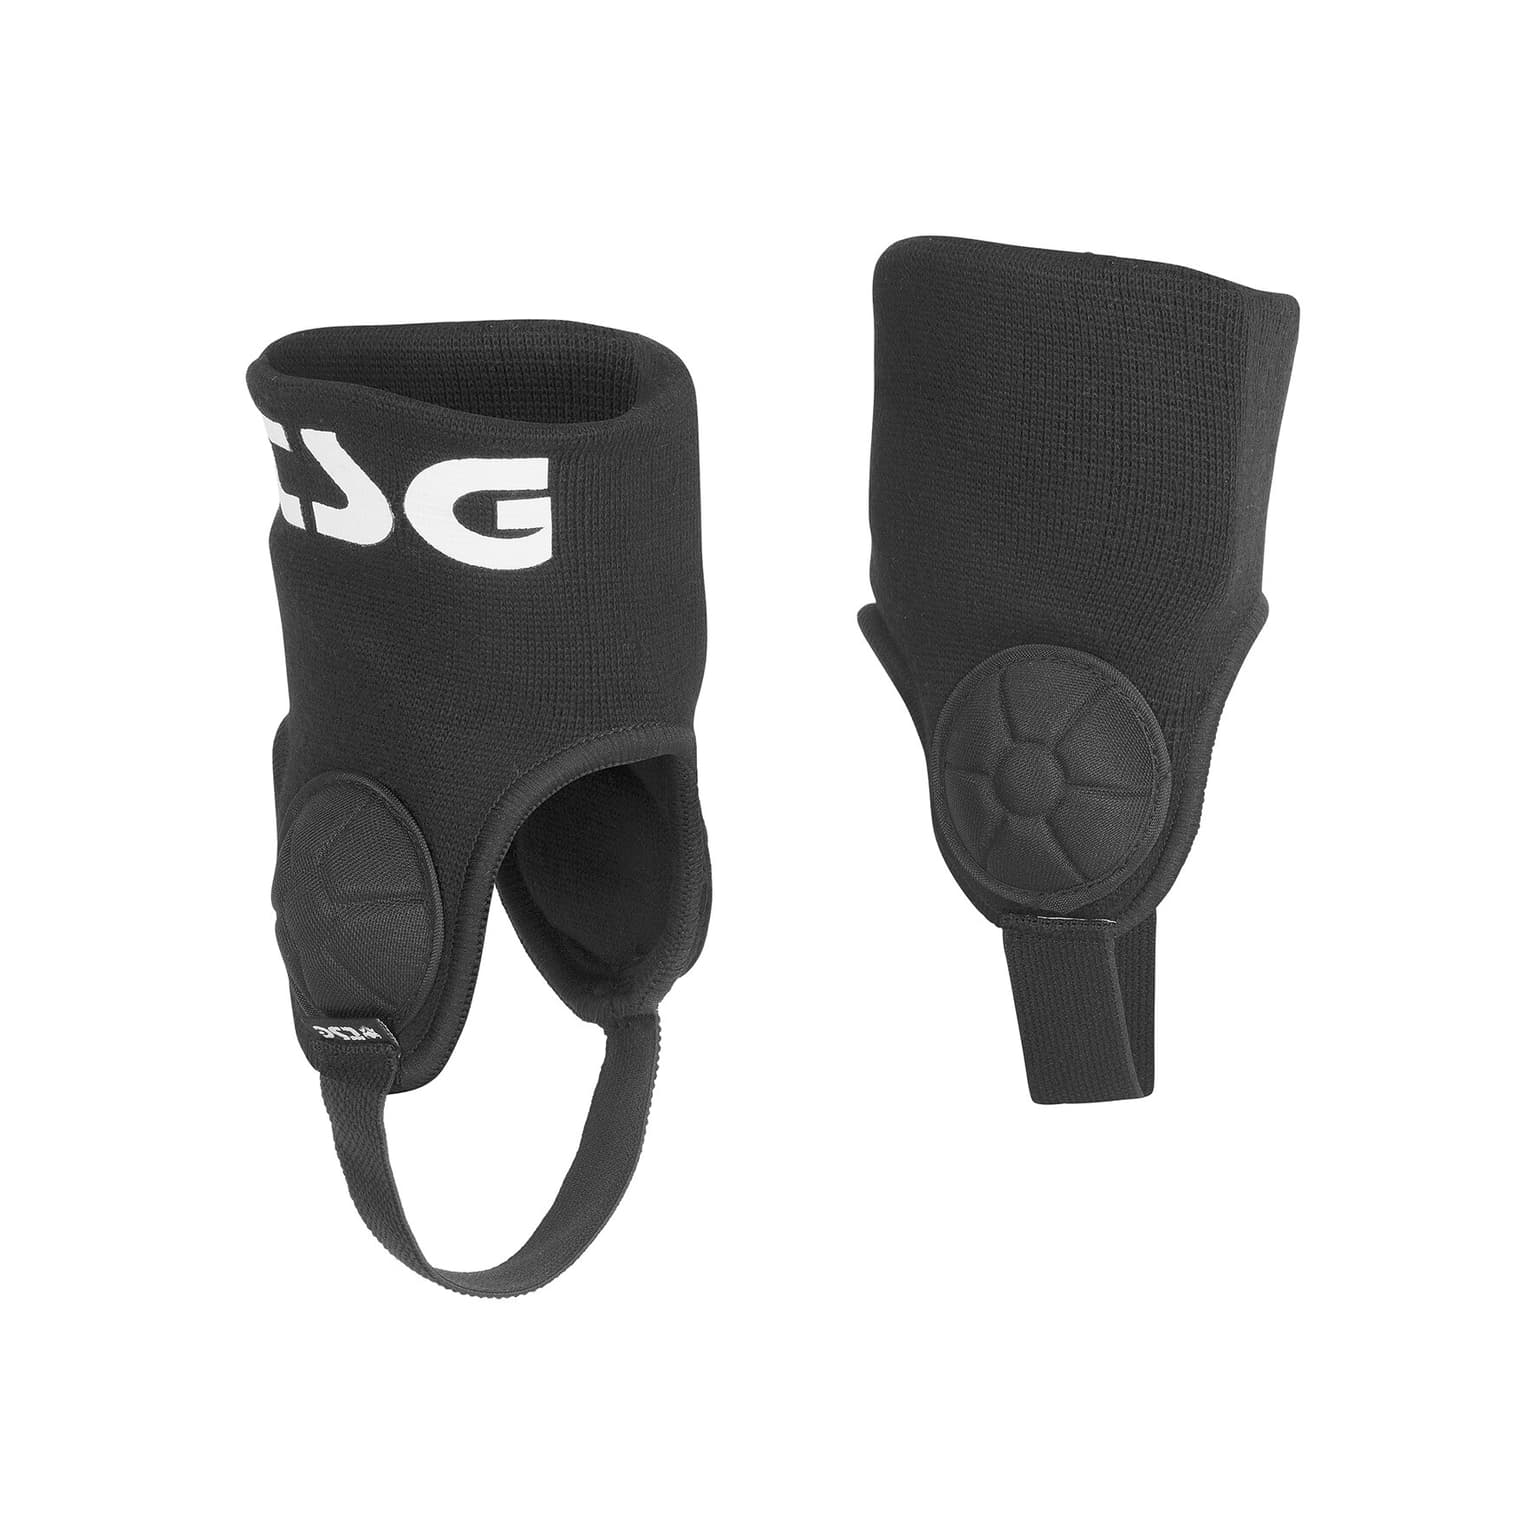 Tsg Tsg Single Ankle-Guard Cam Protections noir 1